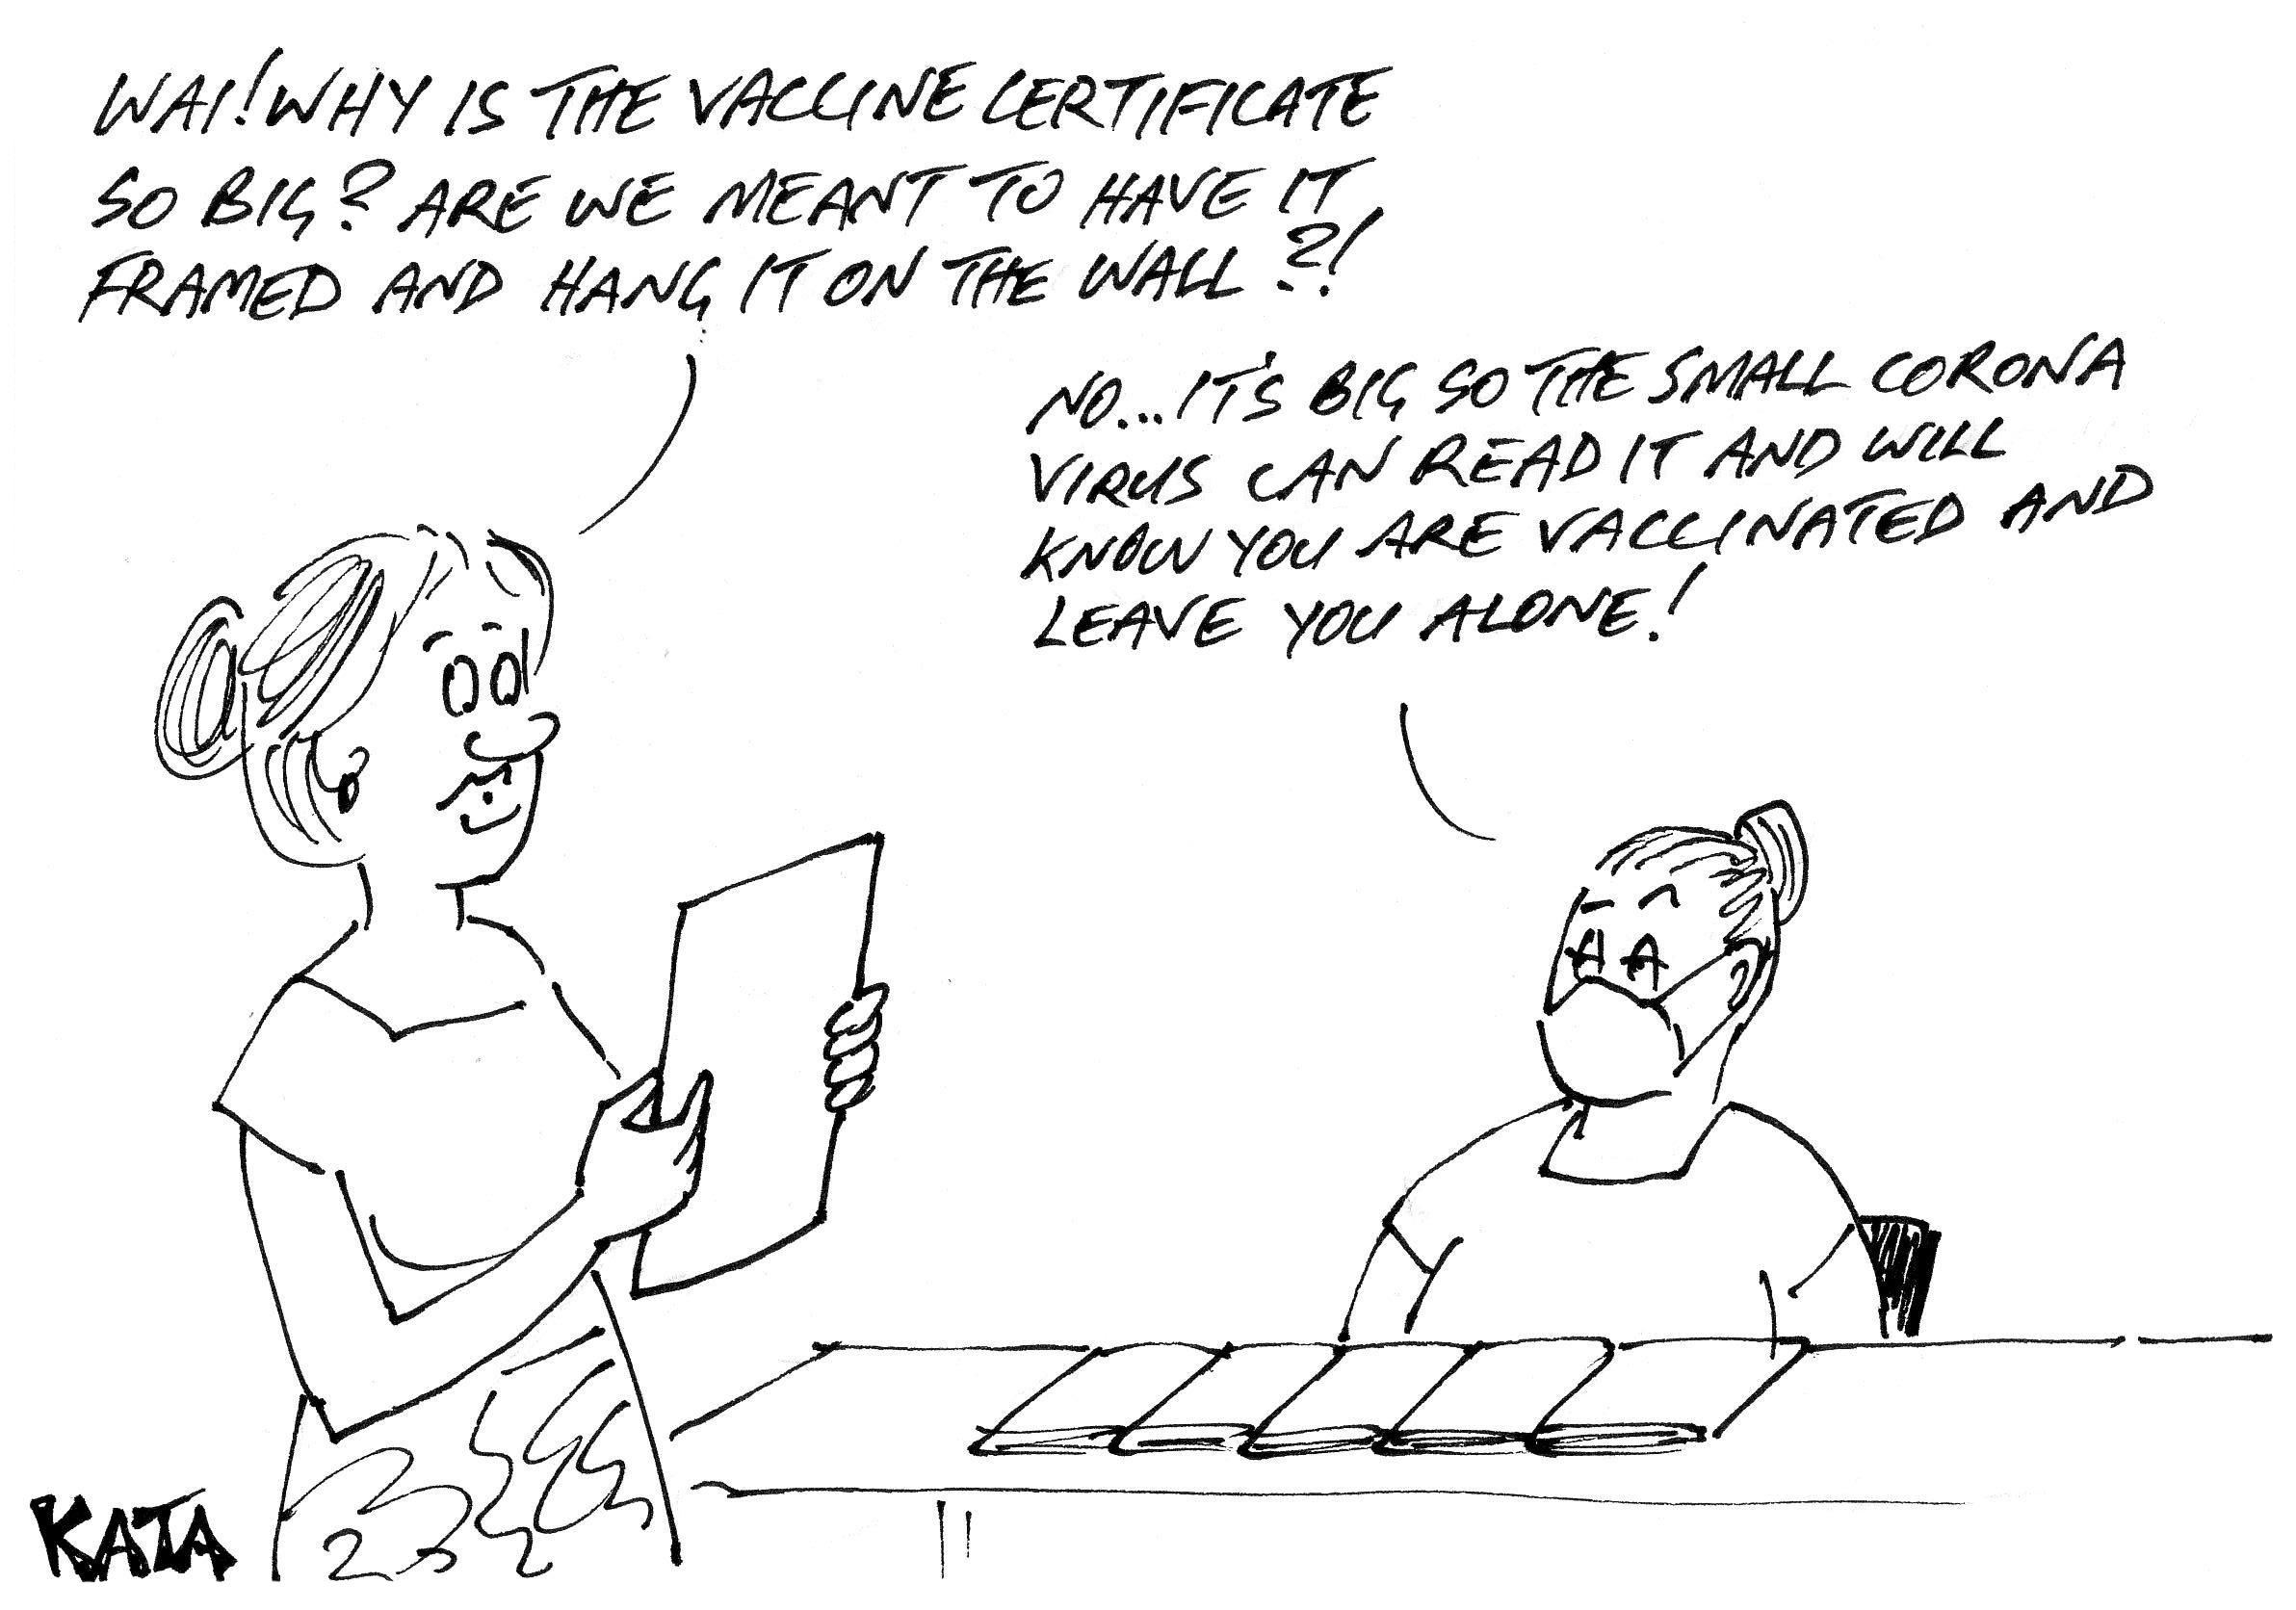 Kata: Vaccine Certificate